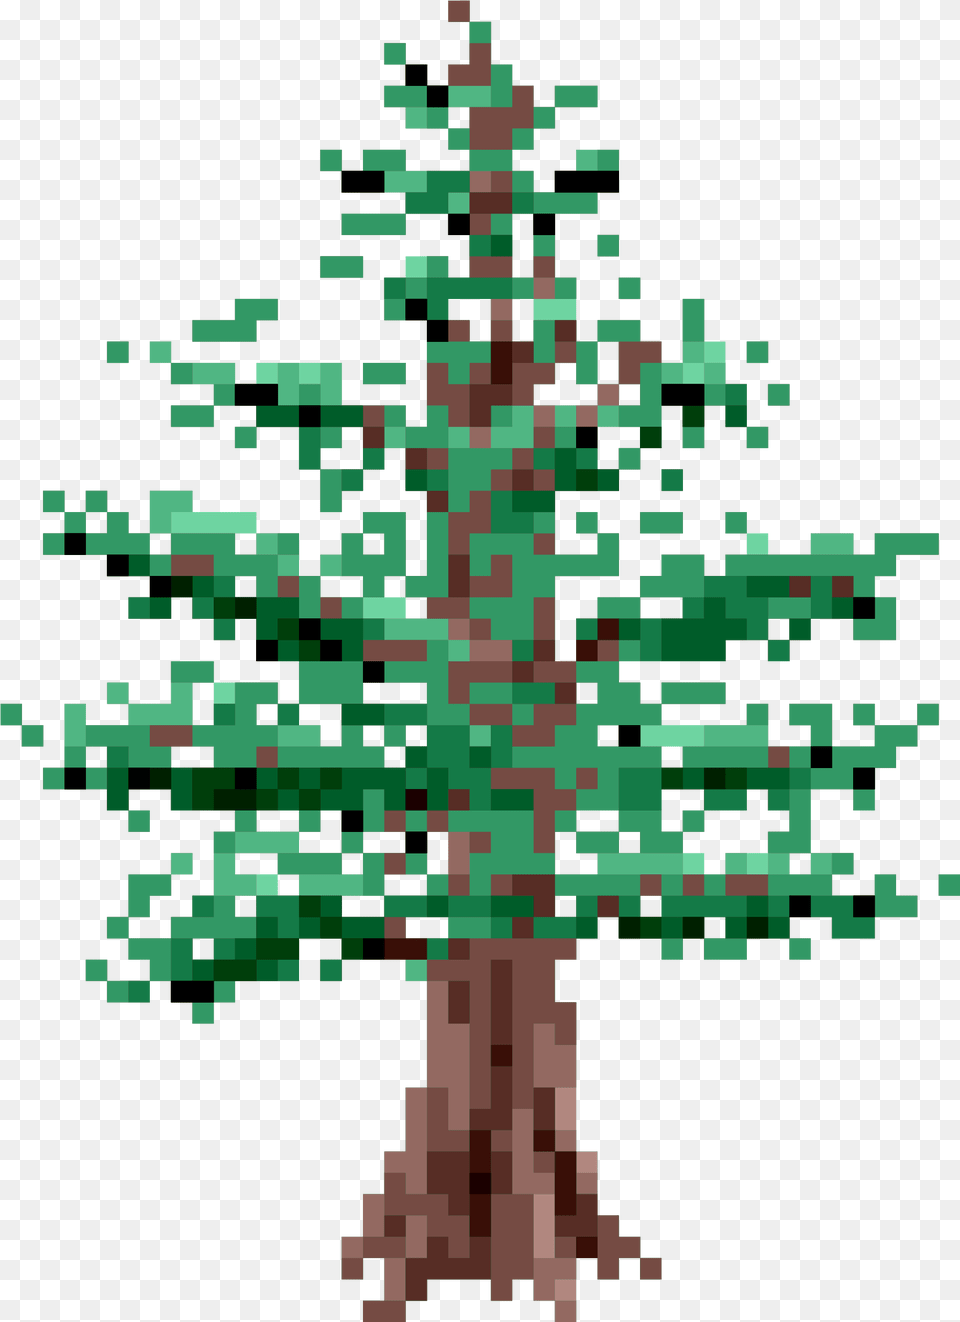 Pine Trees 8 Bit Pine Tree 8 Bit Tree Sprite Pixel Art Pine Tree, Plant, Qr Code Png